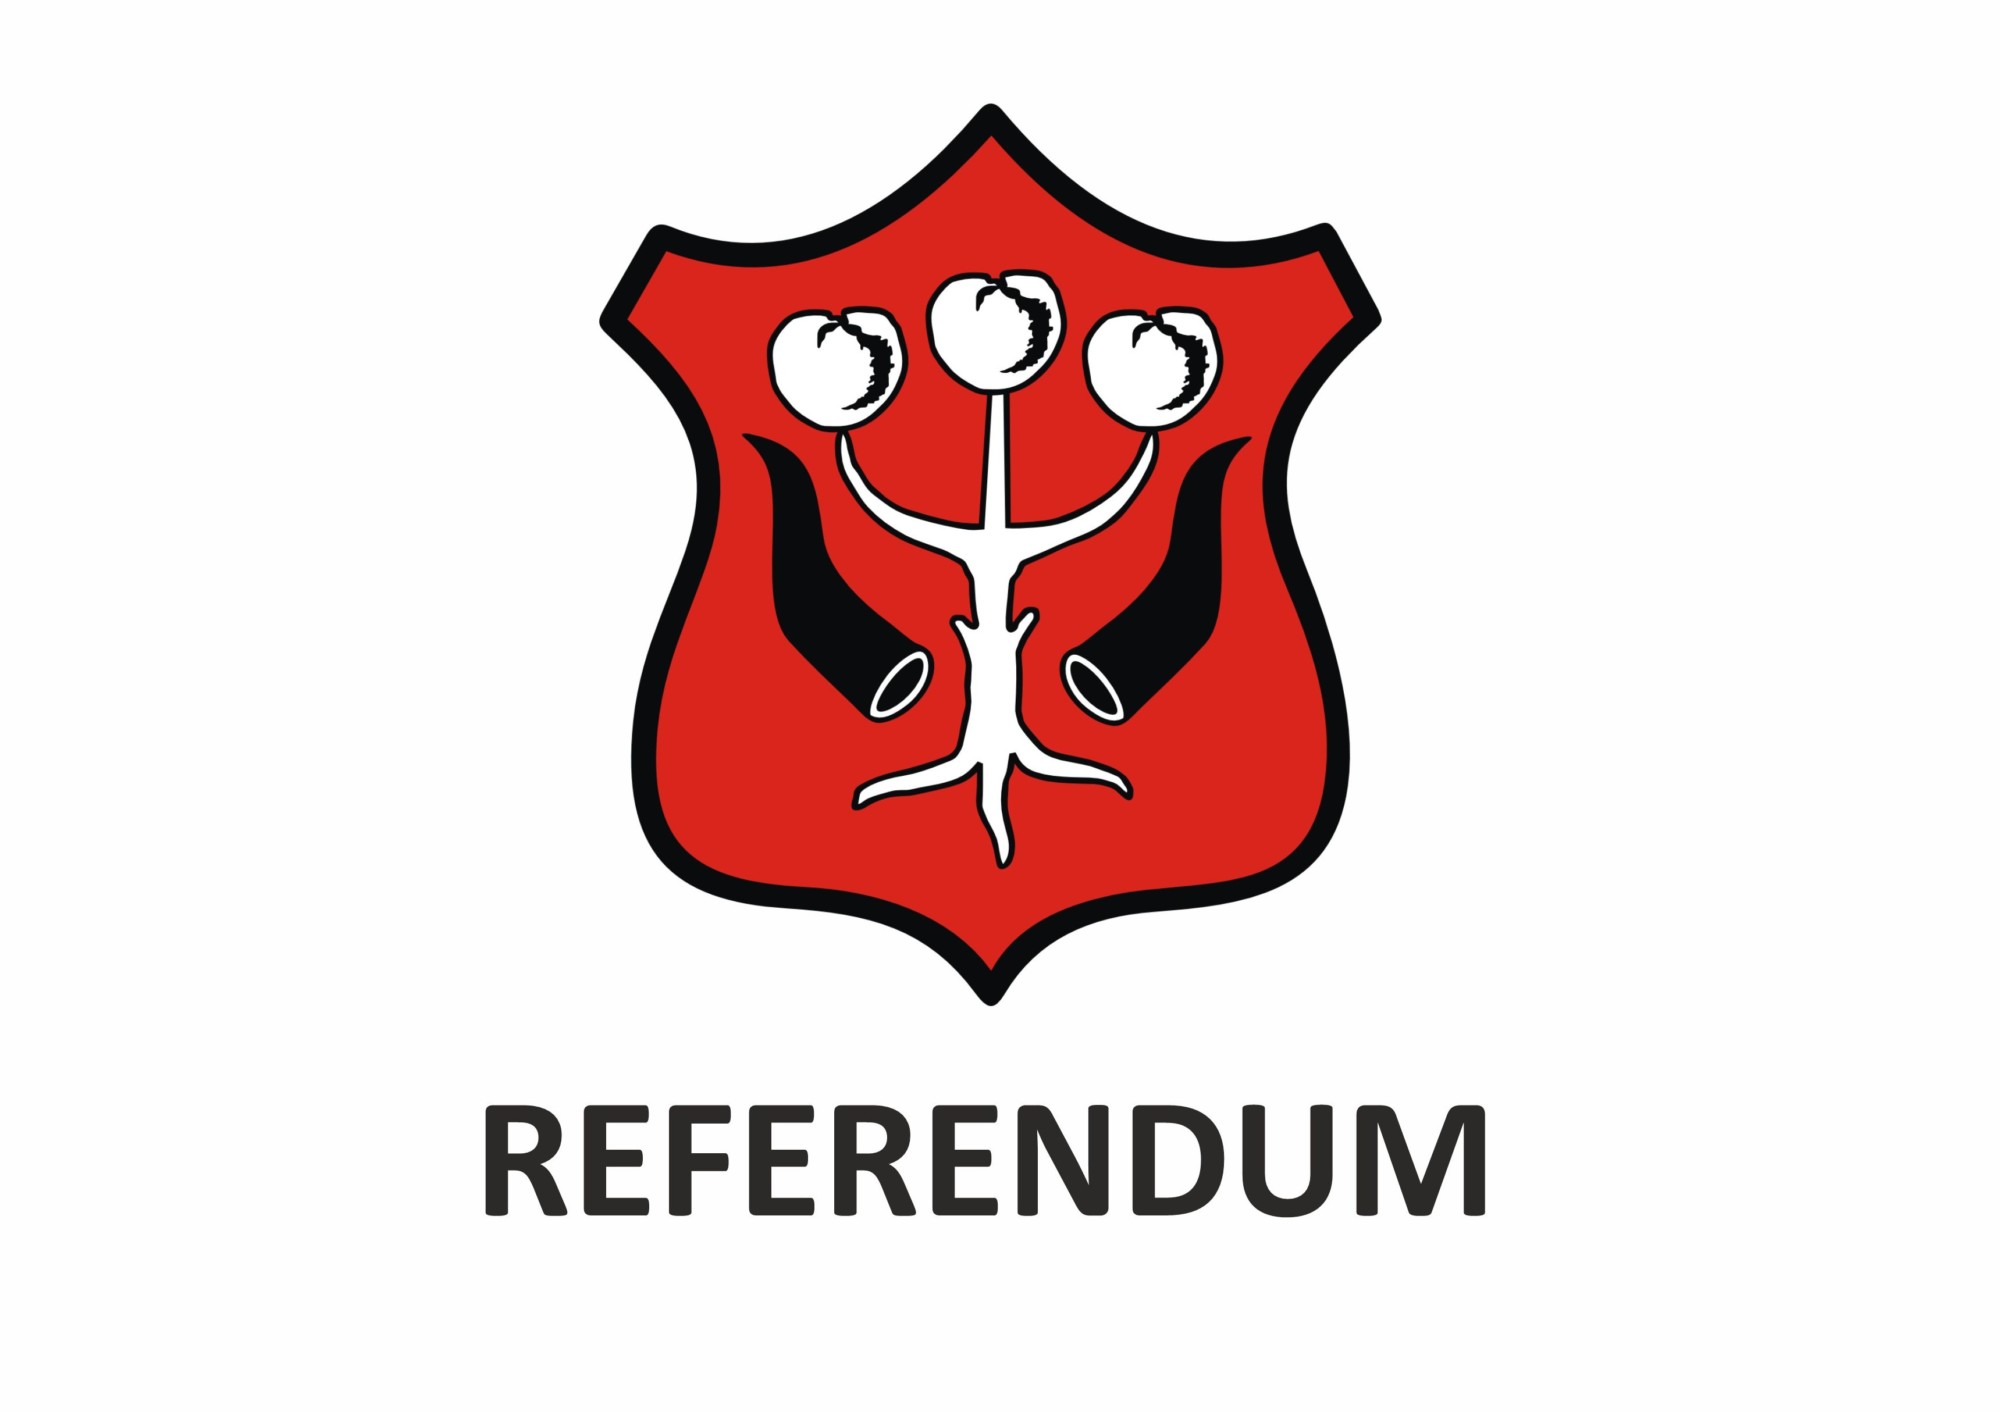 Referendum